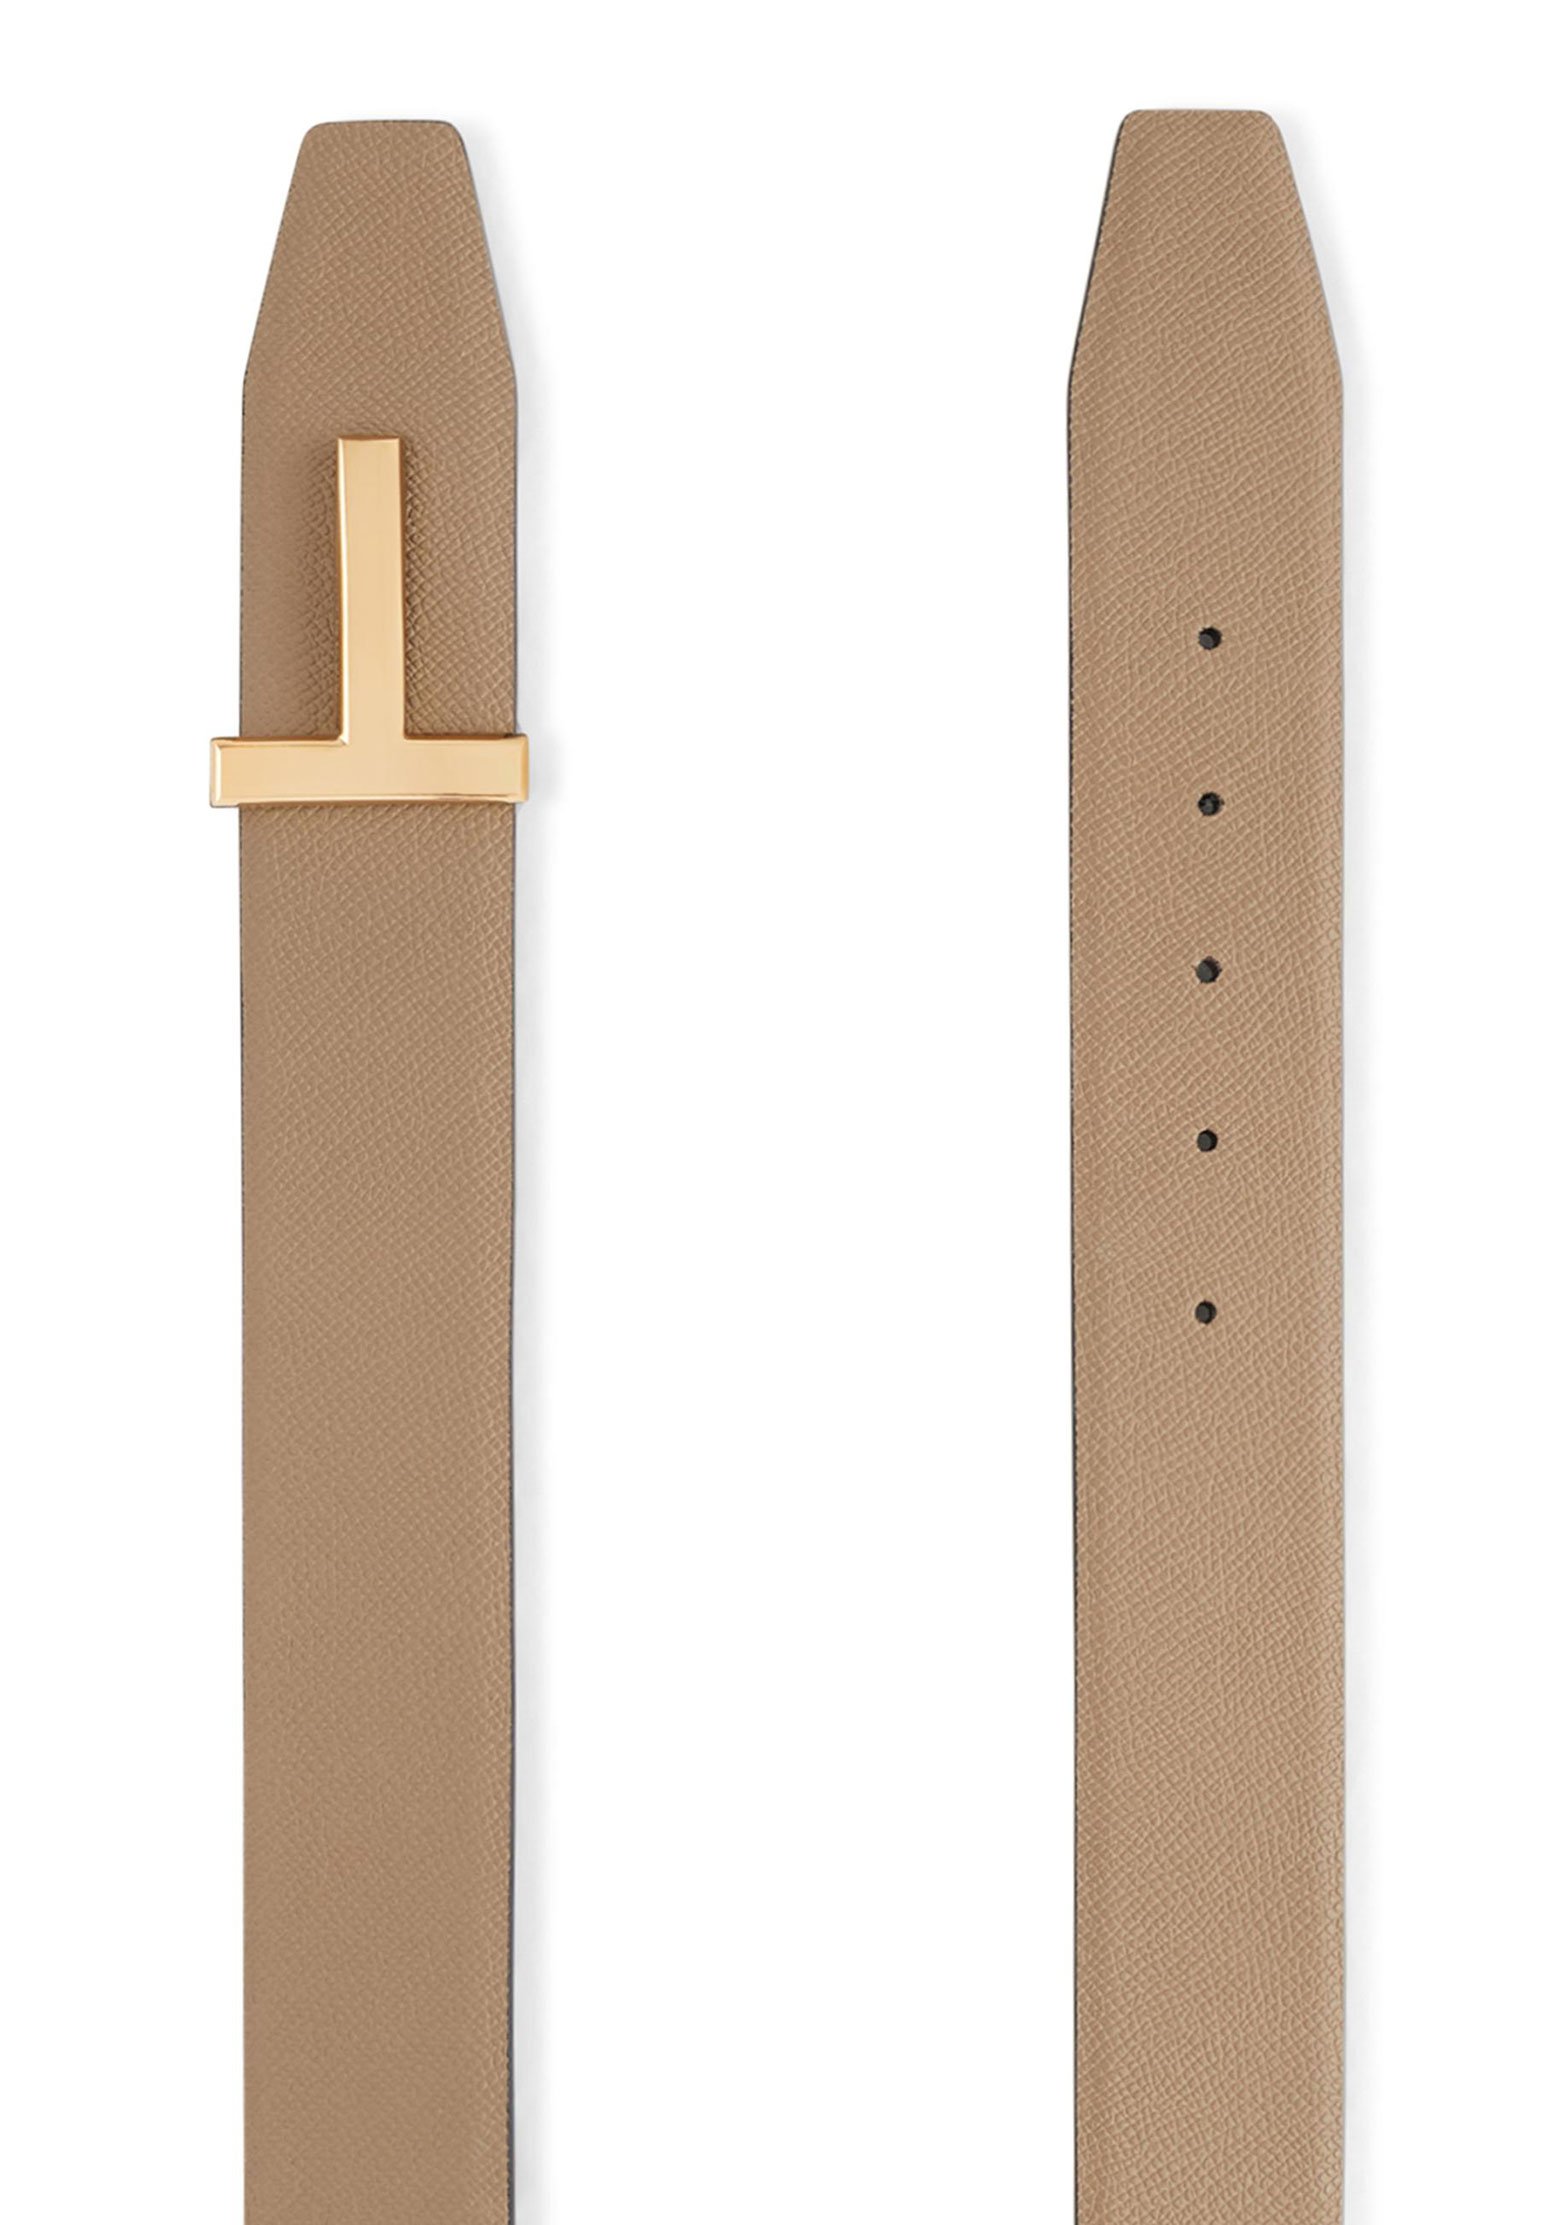 Leather belt TOM FORD Color: beige (Code: 230) in online store Allure